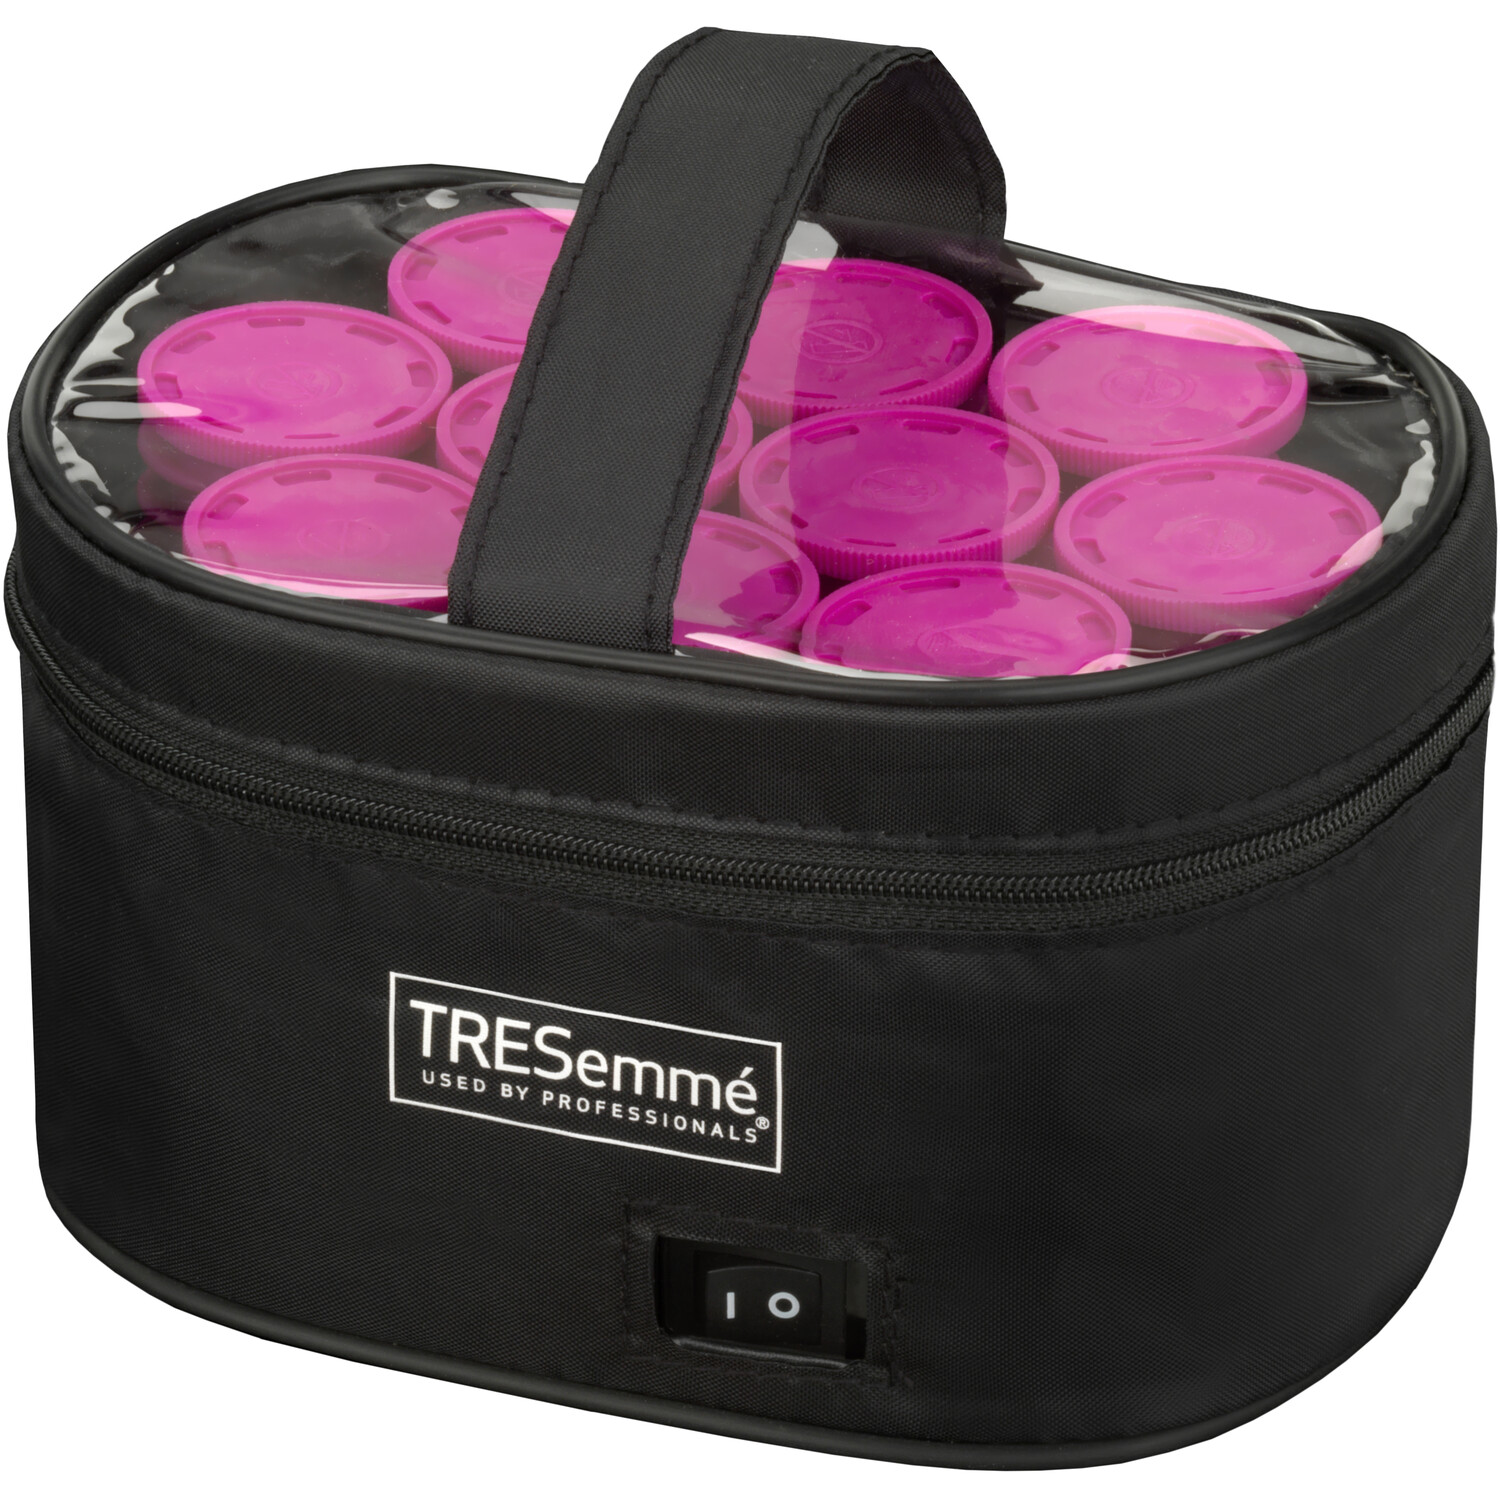 Tresemme Salon Pro Pink Large Volume Rollers 10 Pack Image 2